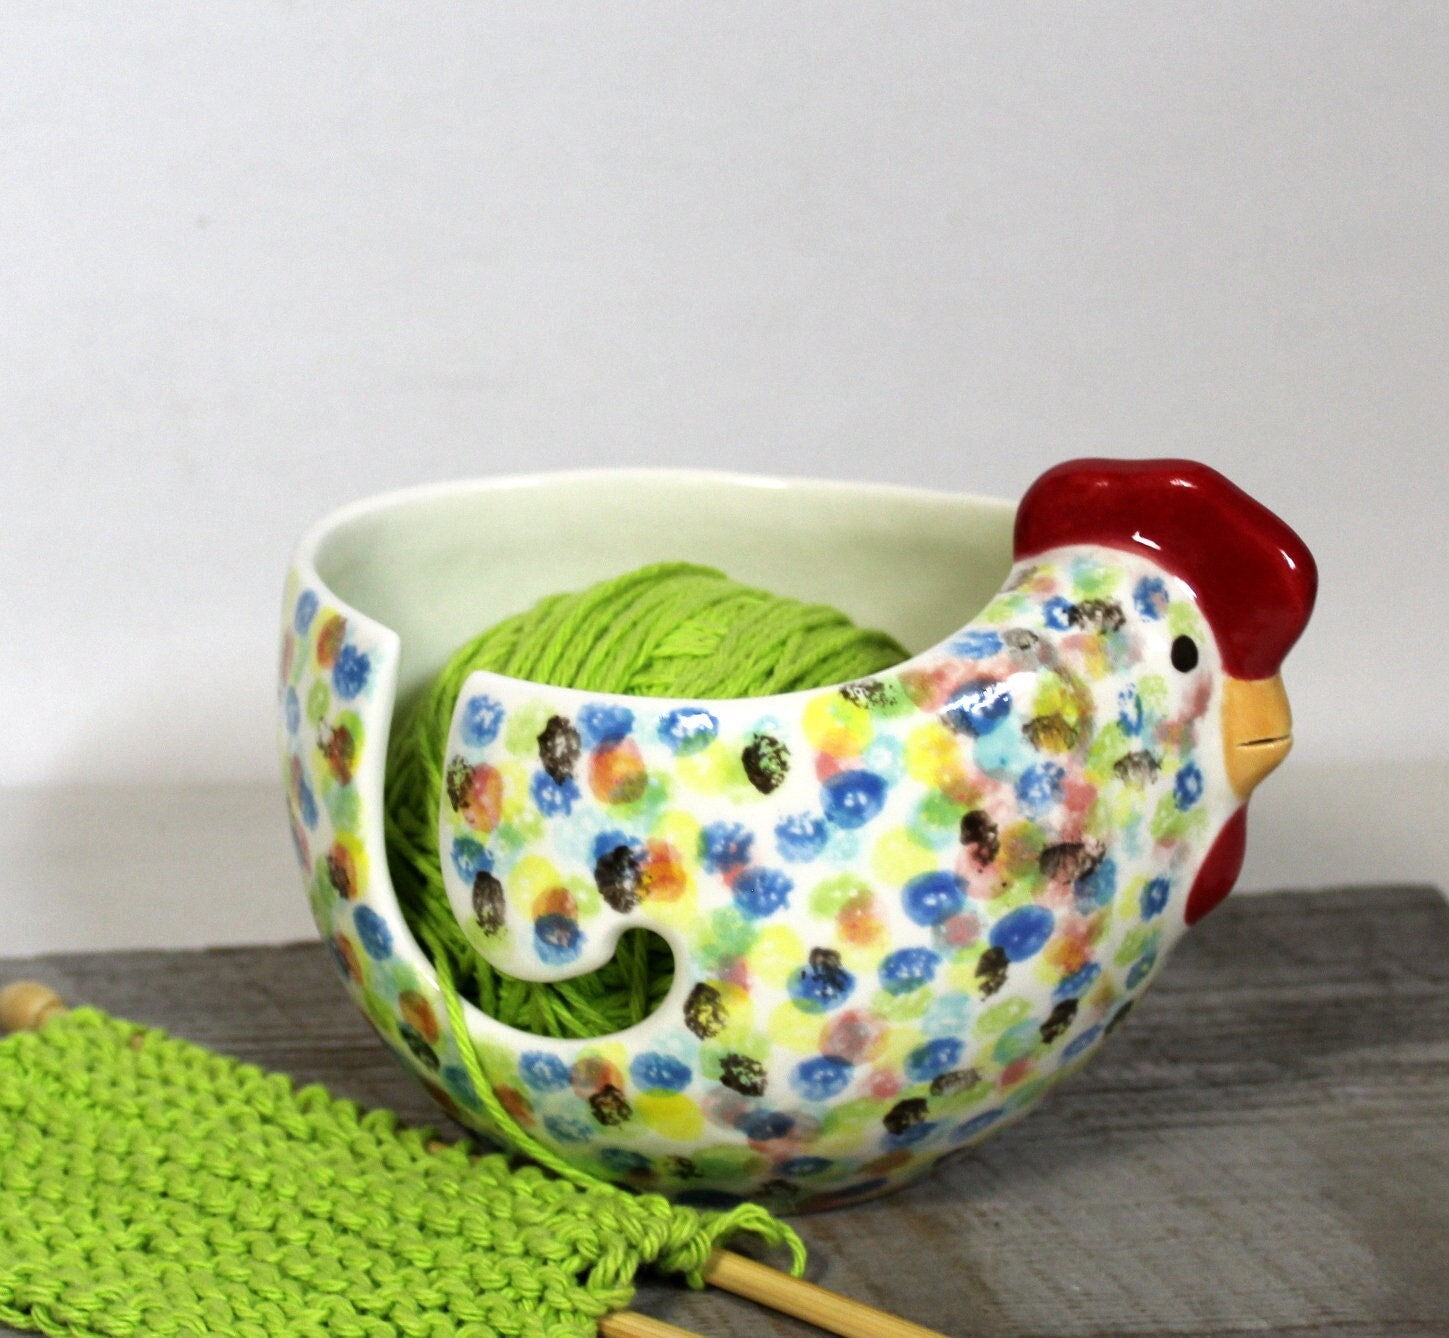  Multi Purpose Wooden Yarn Bowl - Yarn Holder Rosewood -  Knitting Bowl Handmade Wooden Yarn Bowl for Knitting and Crochet